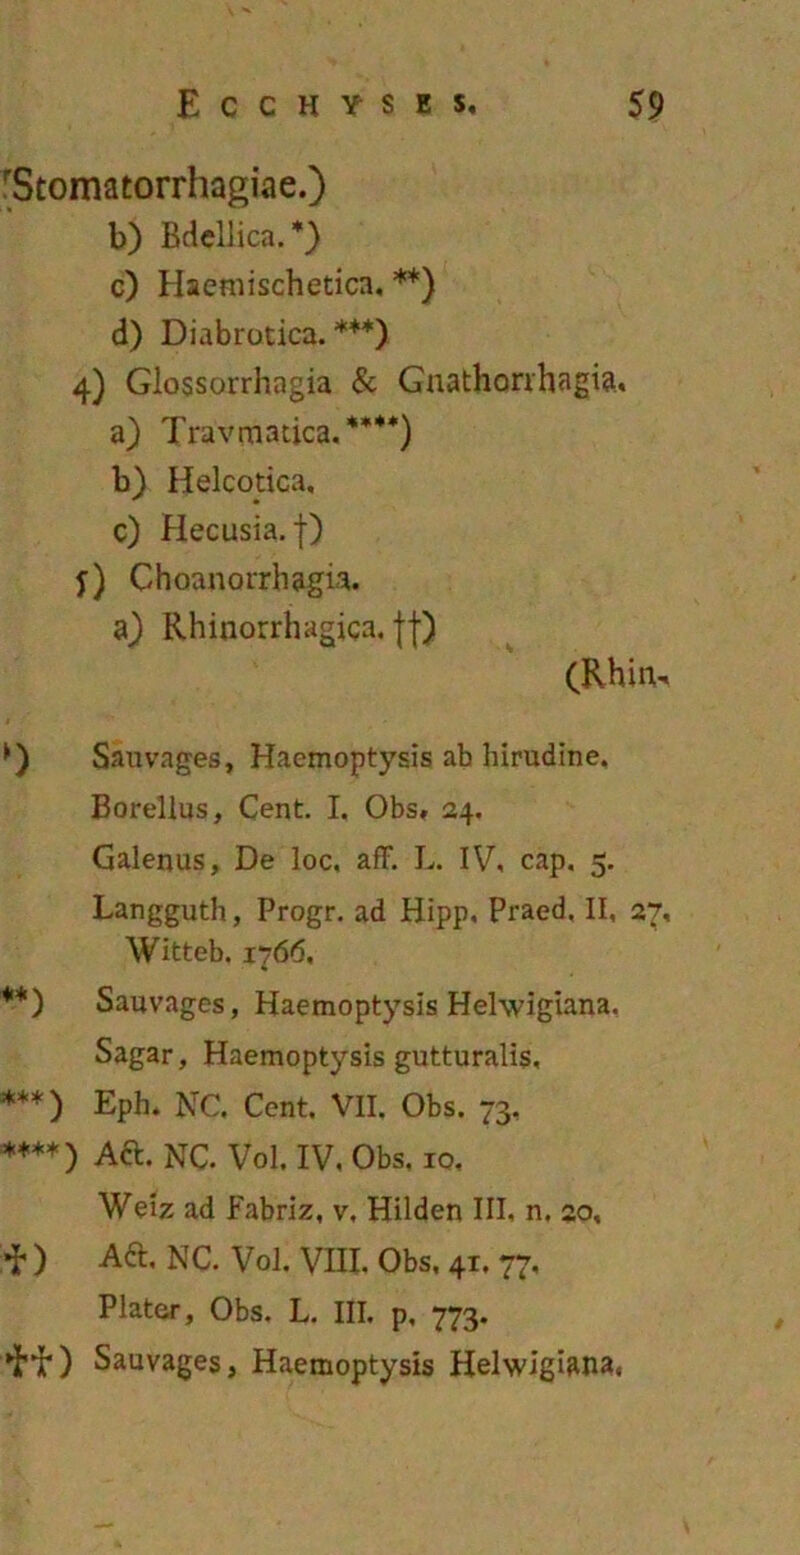 rStomatorrhagiae.) b) Bdellica.*) c) Haemischetica, **) d) Diabrotica. ***) 4) Glossorrhagia & Gnathorrhagia, a) Travenatica.****) b) fjelcotica, c) Hecusia. f) j) Choanorrhagia. a) Rhinorrhagica. |t) (Rhiru >) Sauvages, Haemoptysis ab hirudine. Borellus, Cent. I. Obs» 24. Galenus, De loc, afF. L. IV, cap. 5. Langguth, Progr. ad Hipp, Praed. II, 27, Witteb. 17 66, **) Sauvages, Haemoptysis Helwigiana, Sagar, Haemoptysis gutturalis, ***) Eph. NC. Cent. VII. Obs. 73, ****) A a. NC. Vol. IV. Obs. 10, Weiz ad Fabriz, v. Hilden III, n. 20, •b ) Aft. NC. Vol. VIII. Obs. 41. 77, Plater, Obs. L. III. p, 773. *Ib) Sauvages, Haemoptysis Helwigiana,